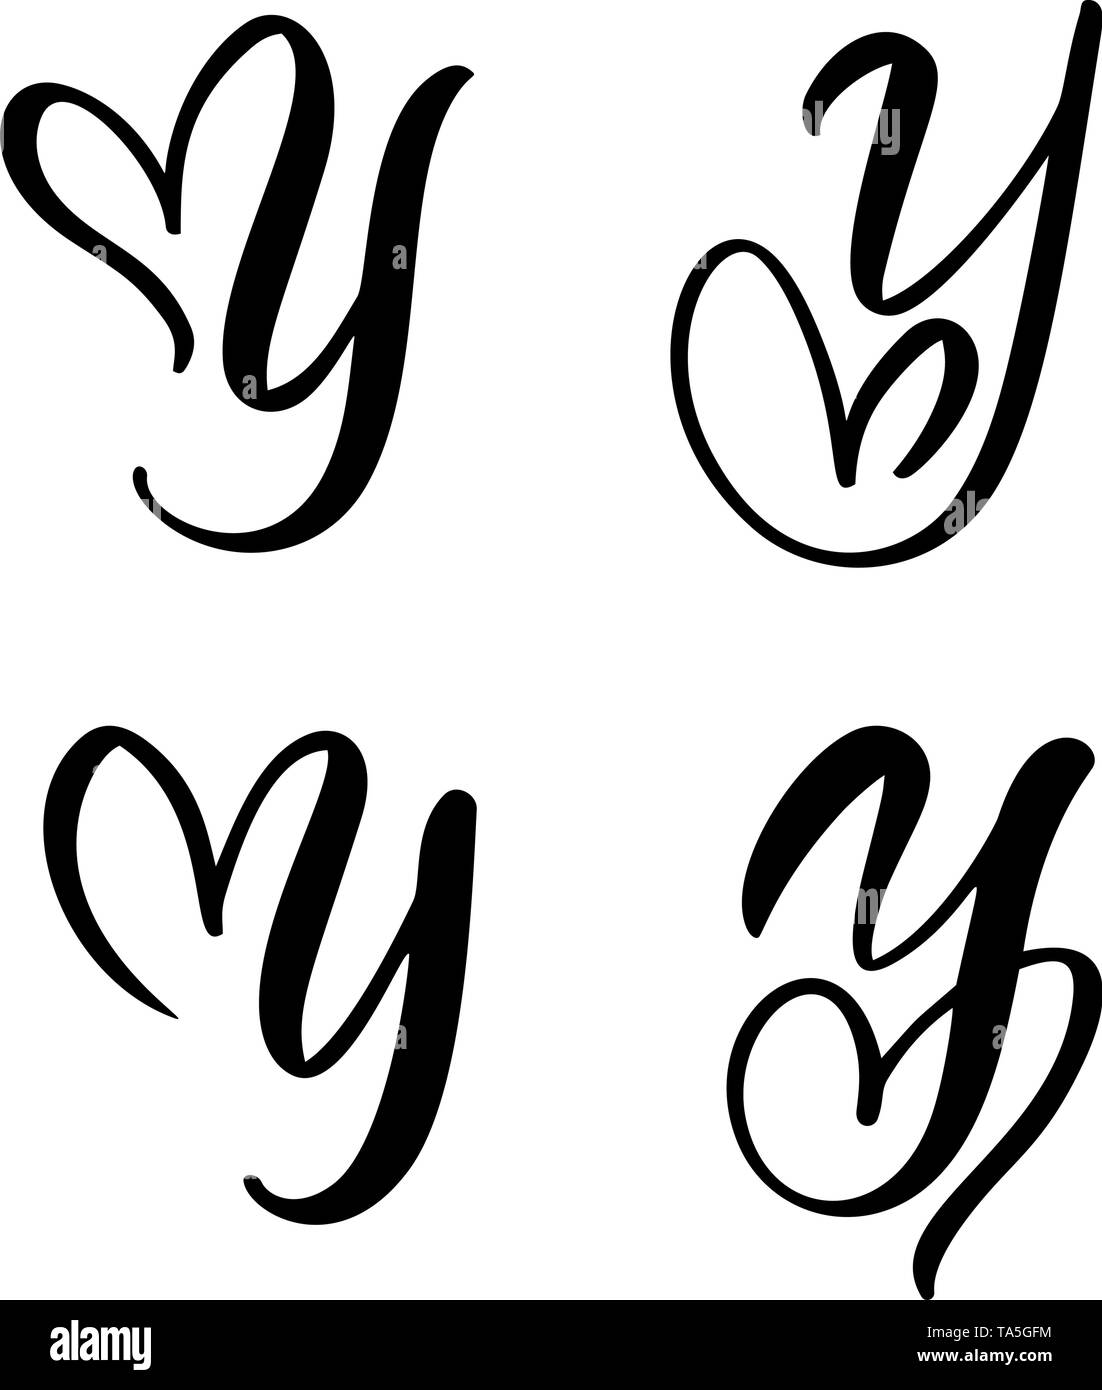 Decorative vintage initial letters yl monogram Vector Image